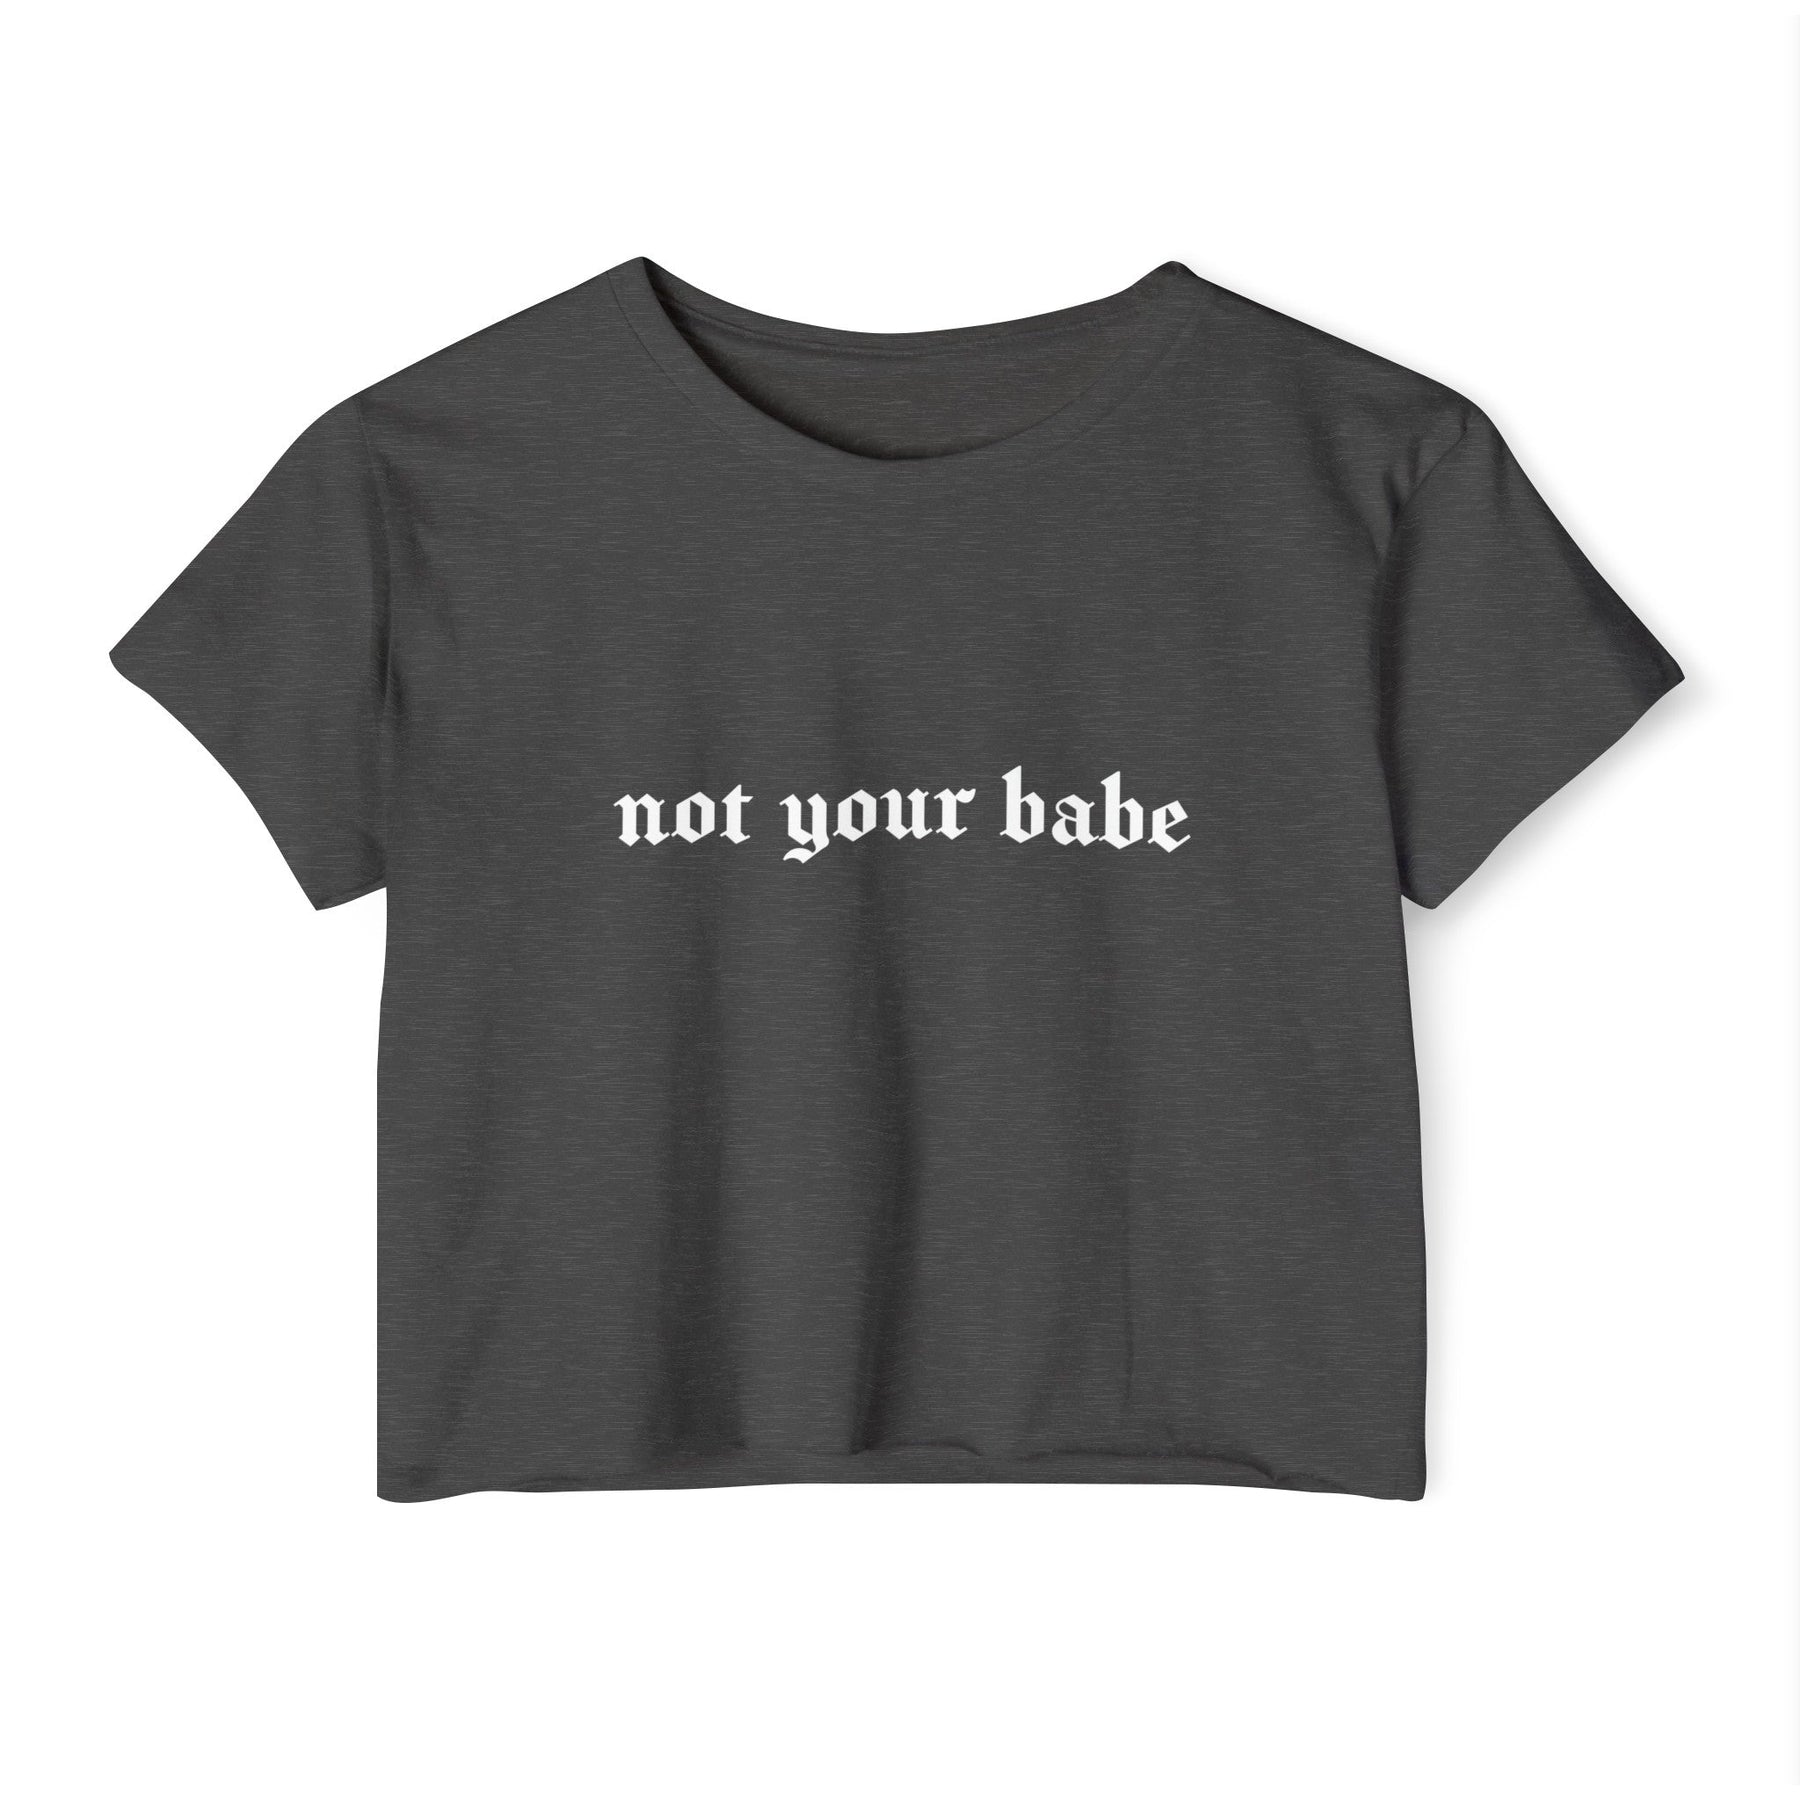 Not Your Babe Women's Lightweight Crop Top - Goth Cloth Co.T - Shirt21596860569482579363